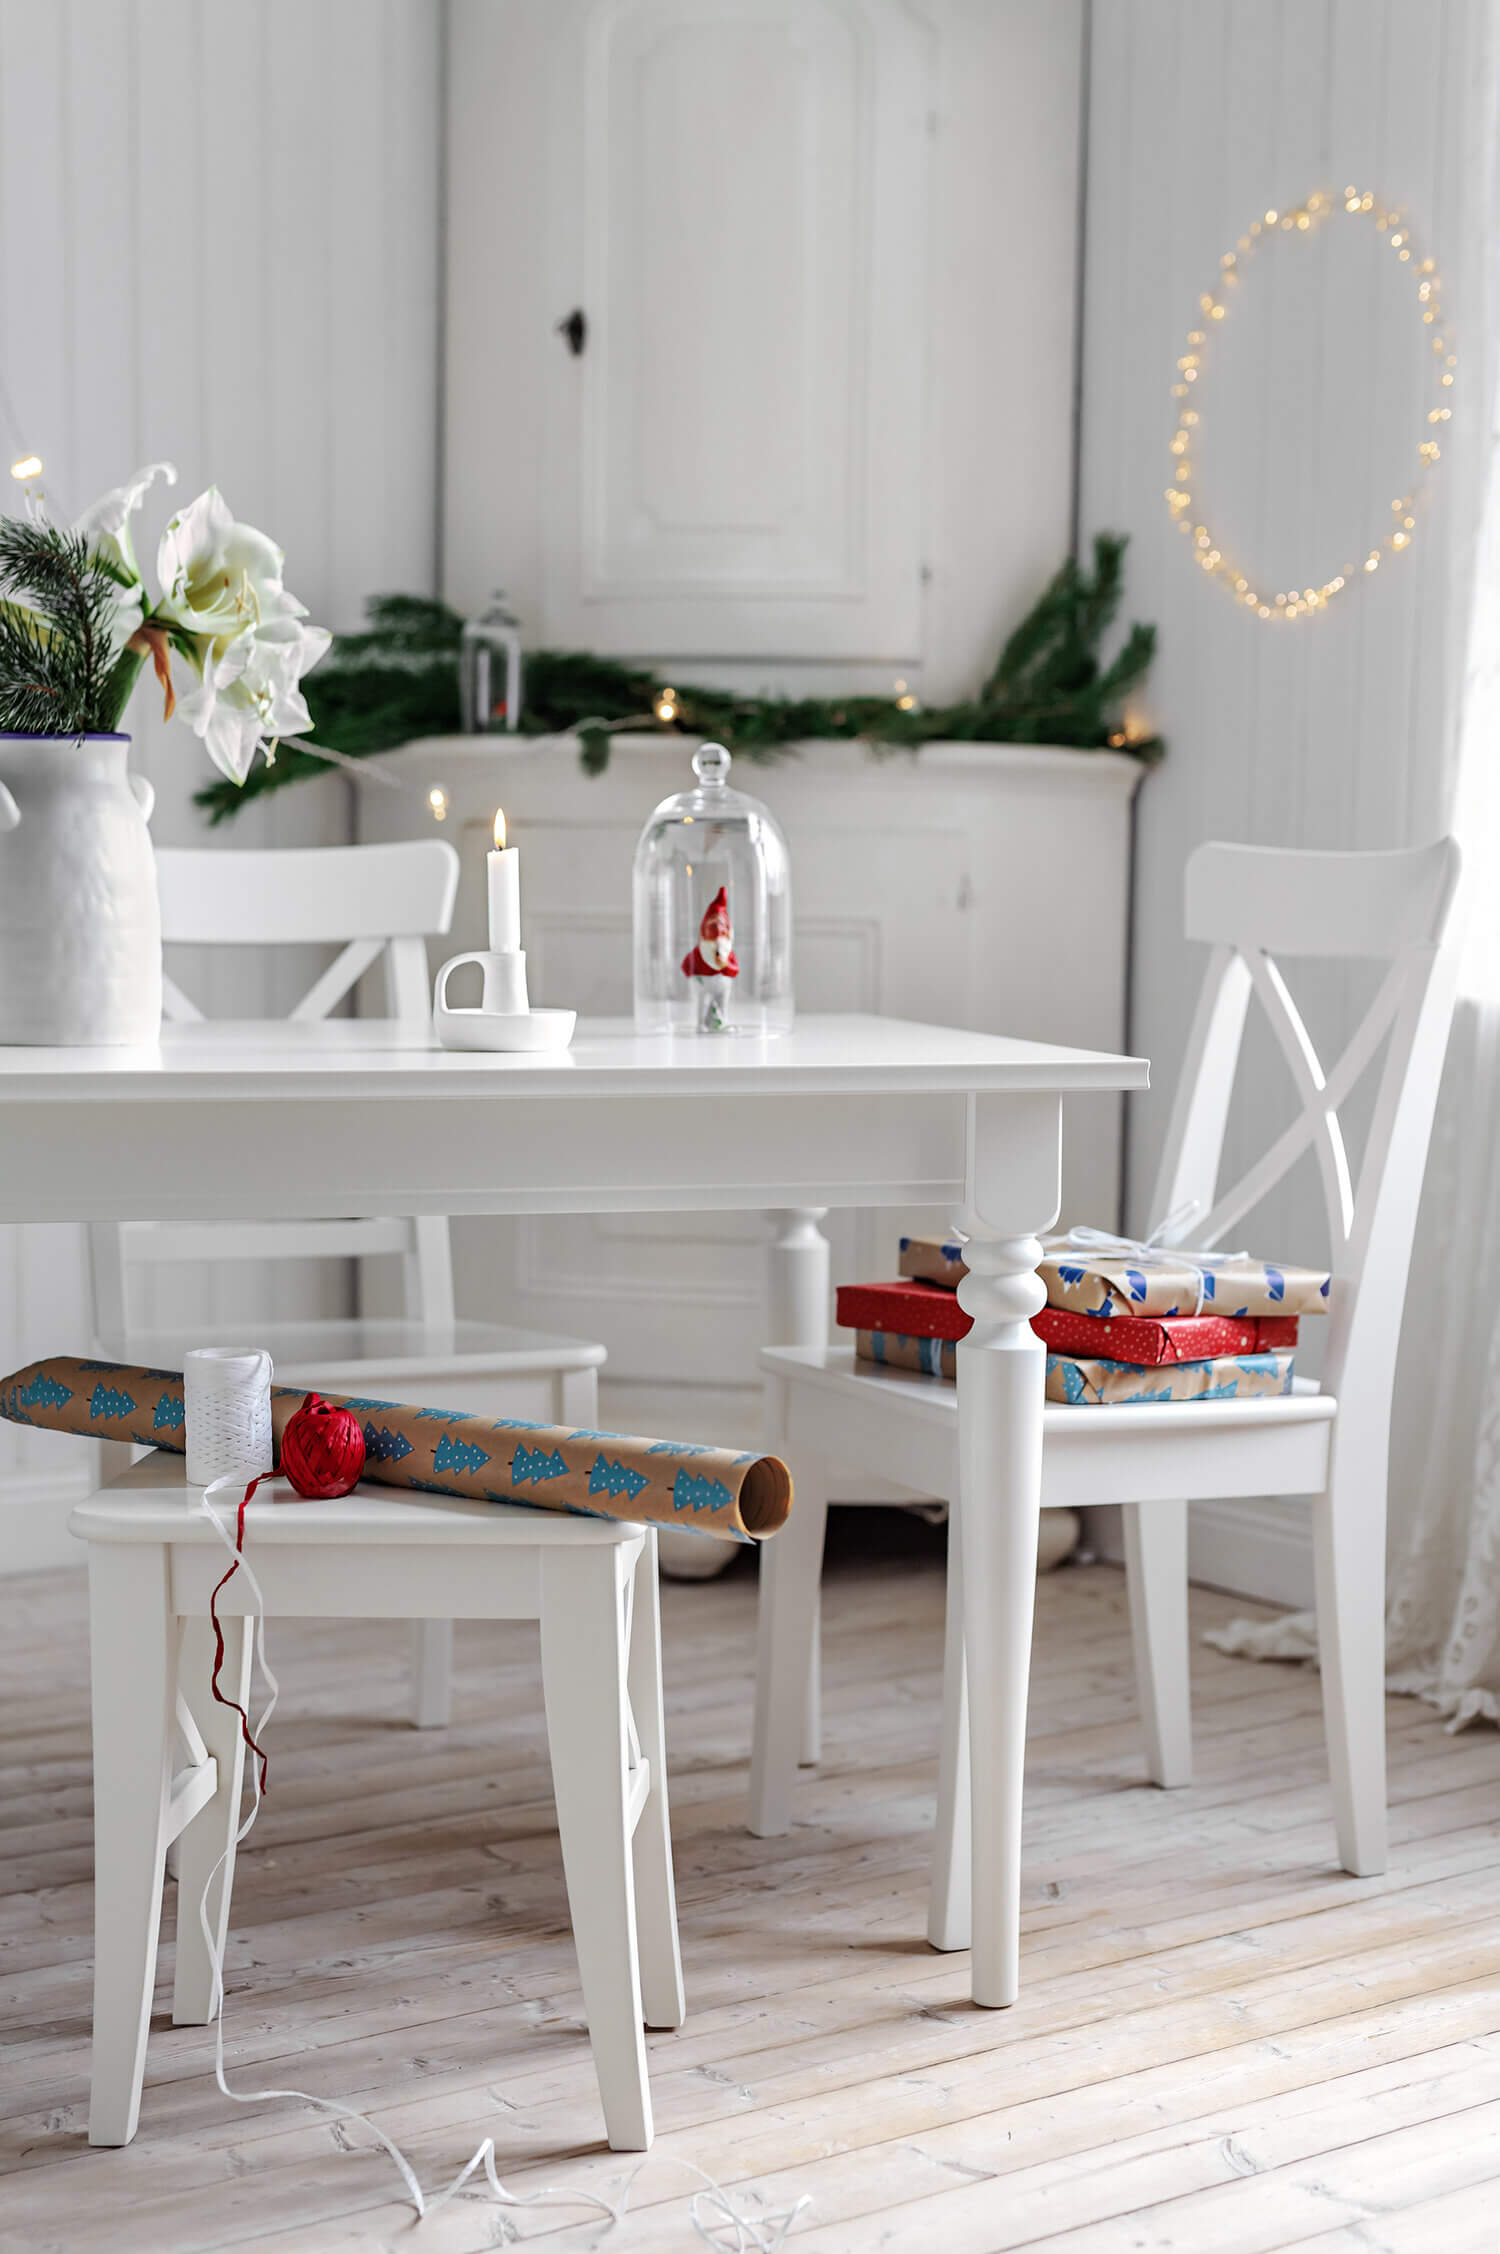 ikea christmas decor nordroom23 Cozy Christmas Home Decor Inspiration From IKEA